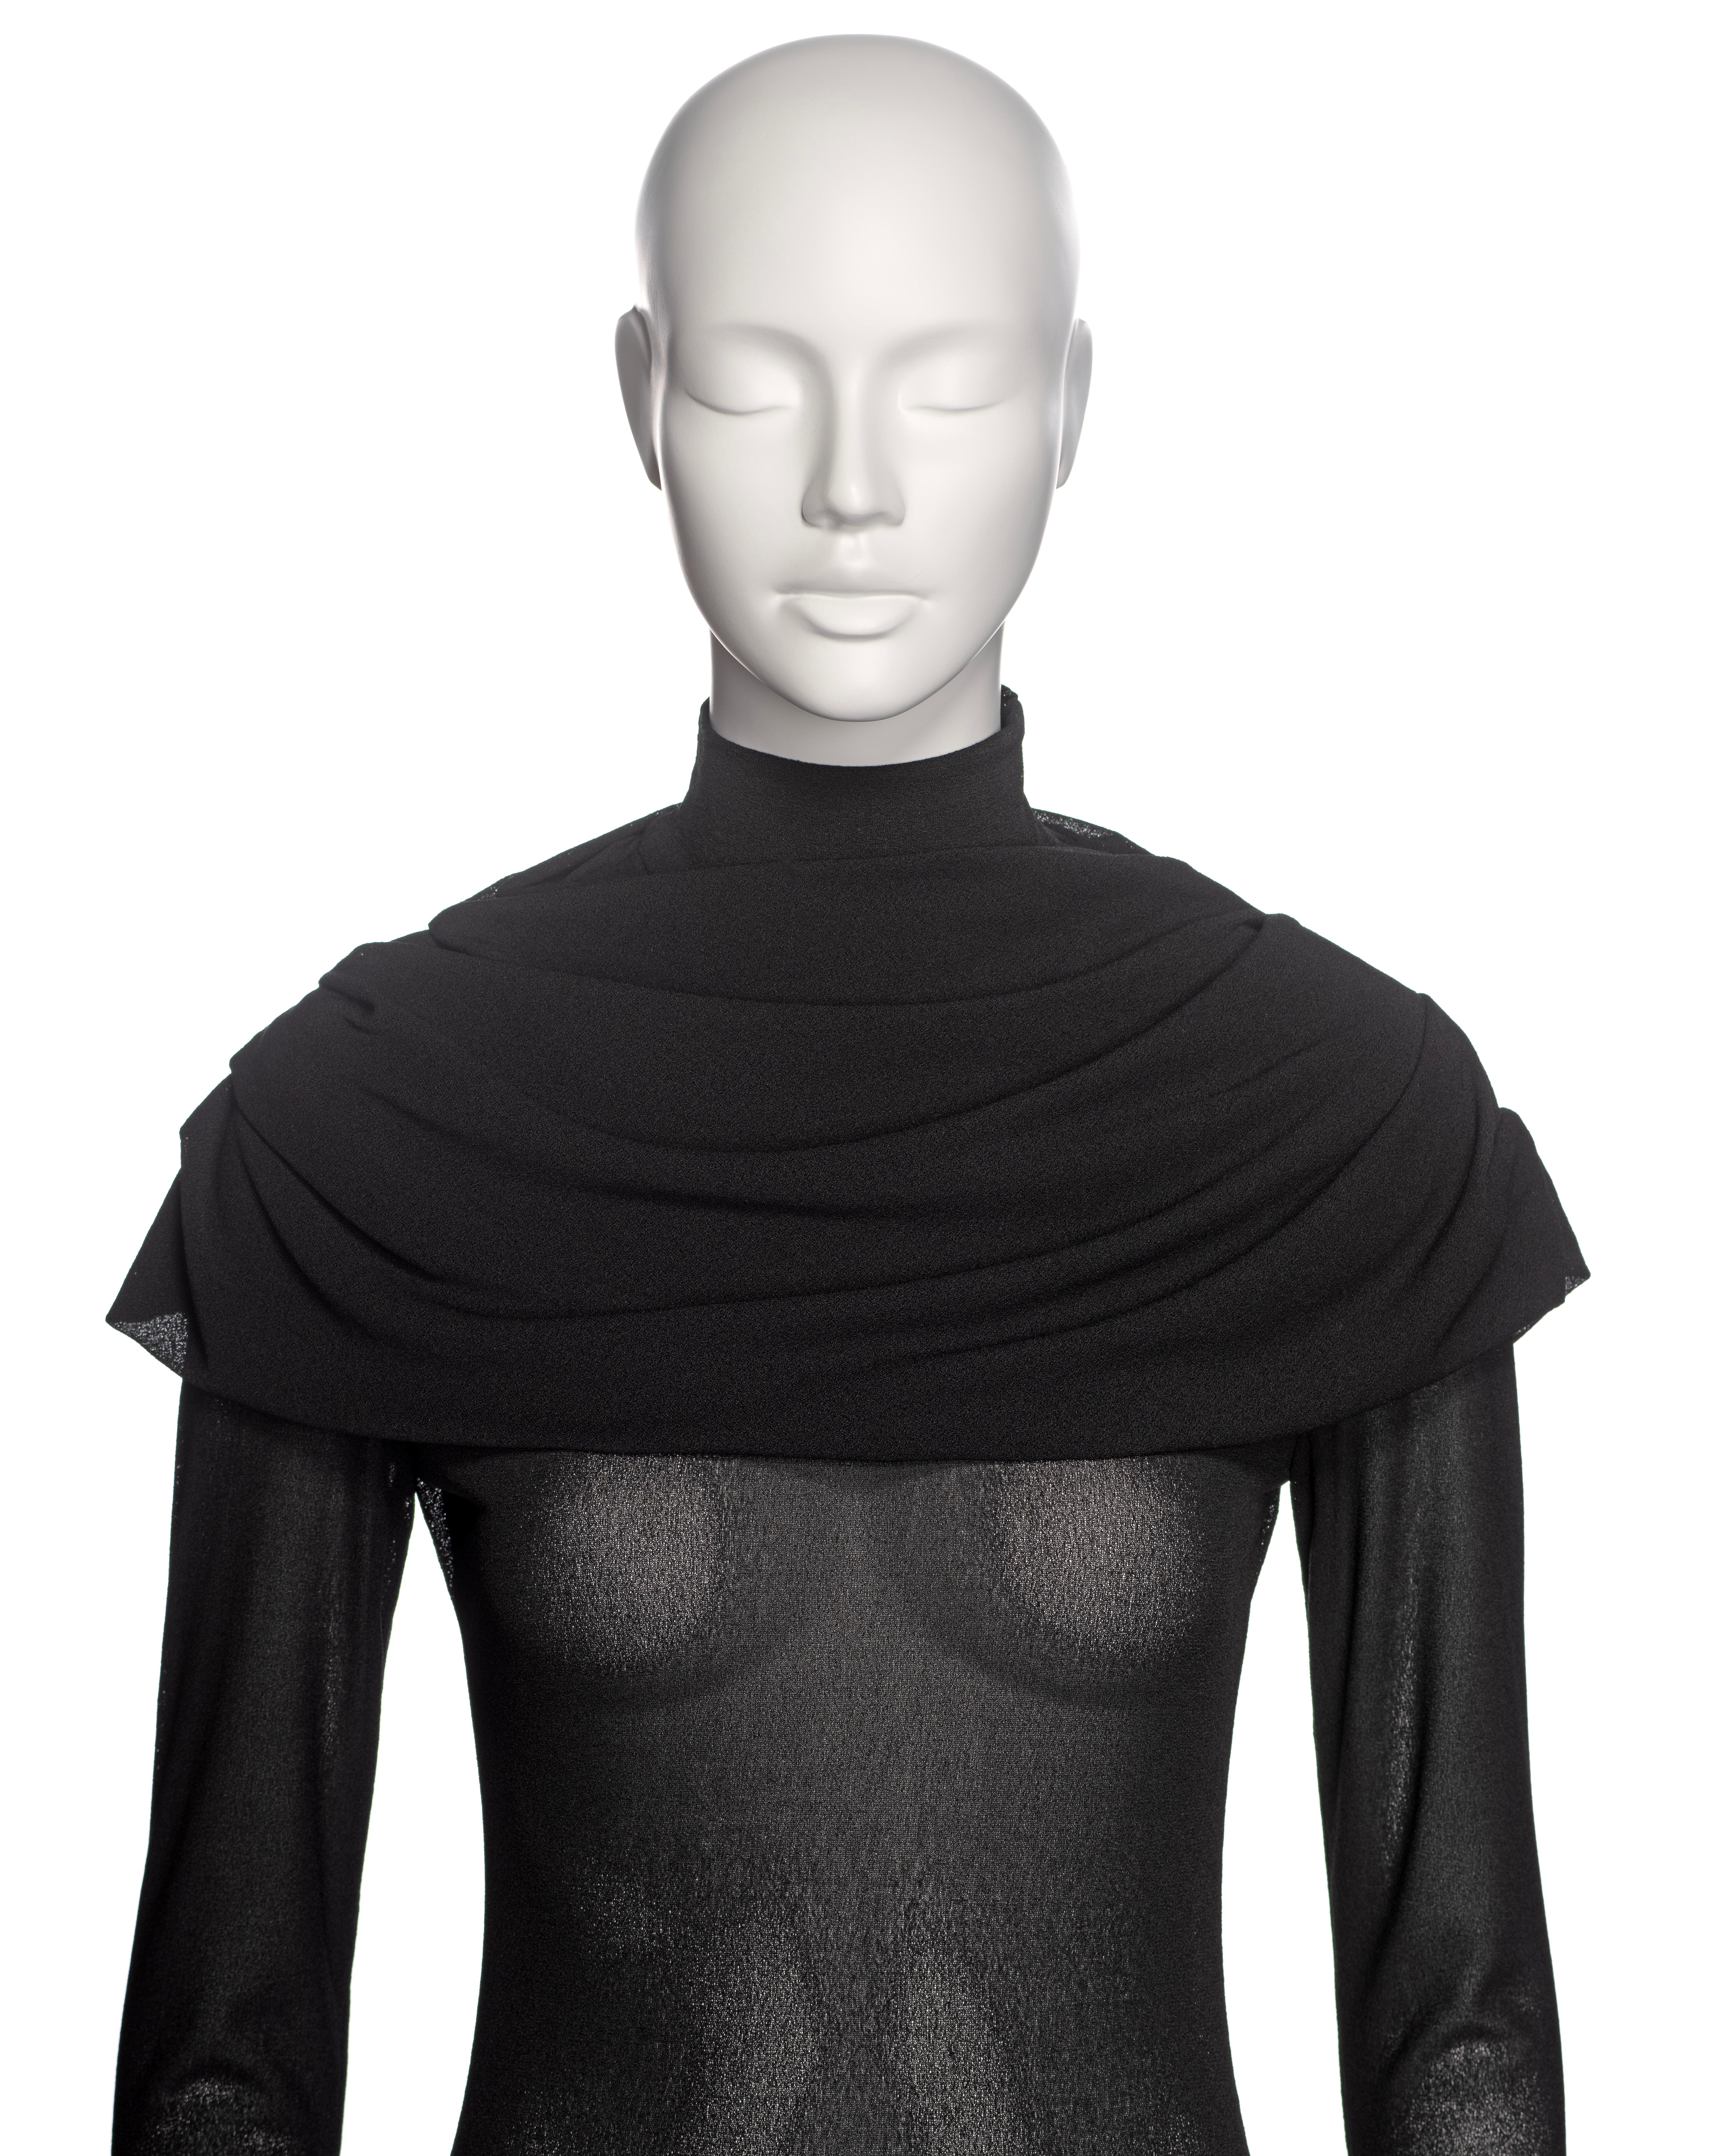 Women's Alexander McQueen Black Mock Neck Evening Dress with Draped Cowl, 'Joan' FW 1998 For Sale